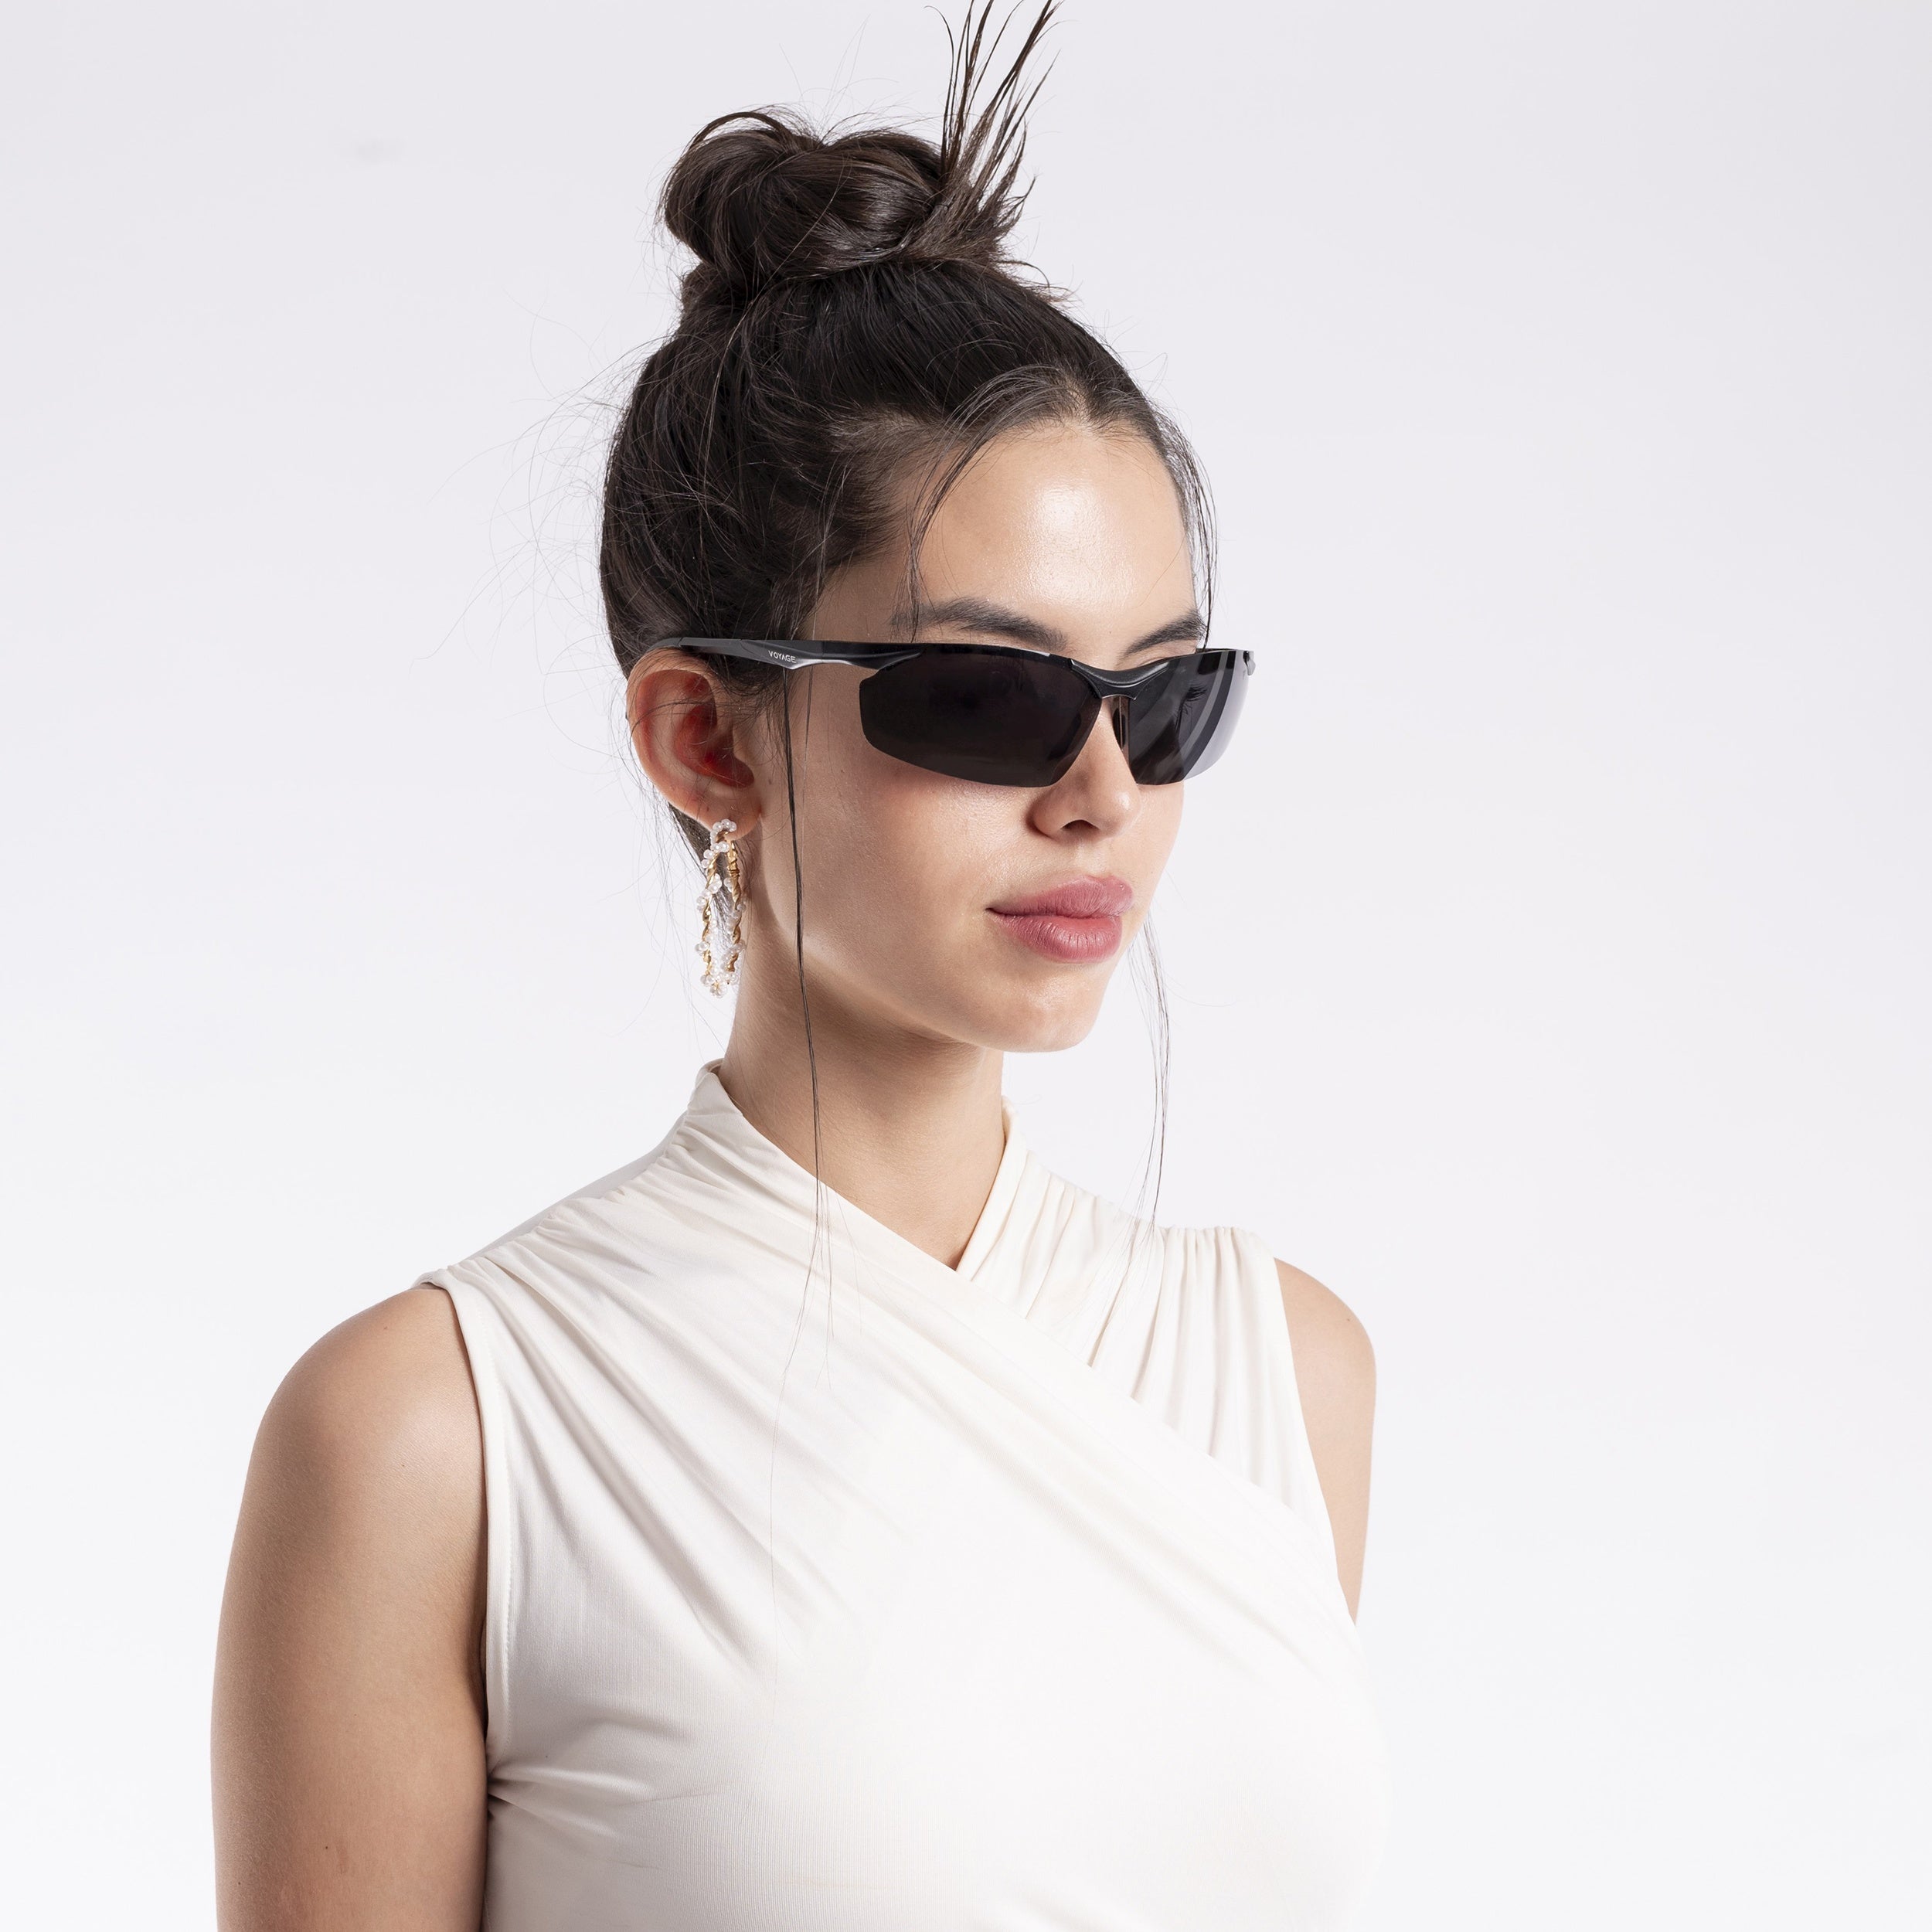 Voyage Exclusive Black Polarized Wrap Around Sunglasses for Men & Women - PMG4648